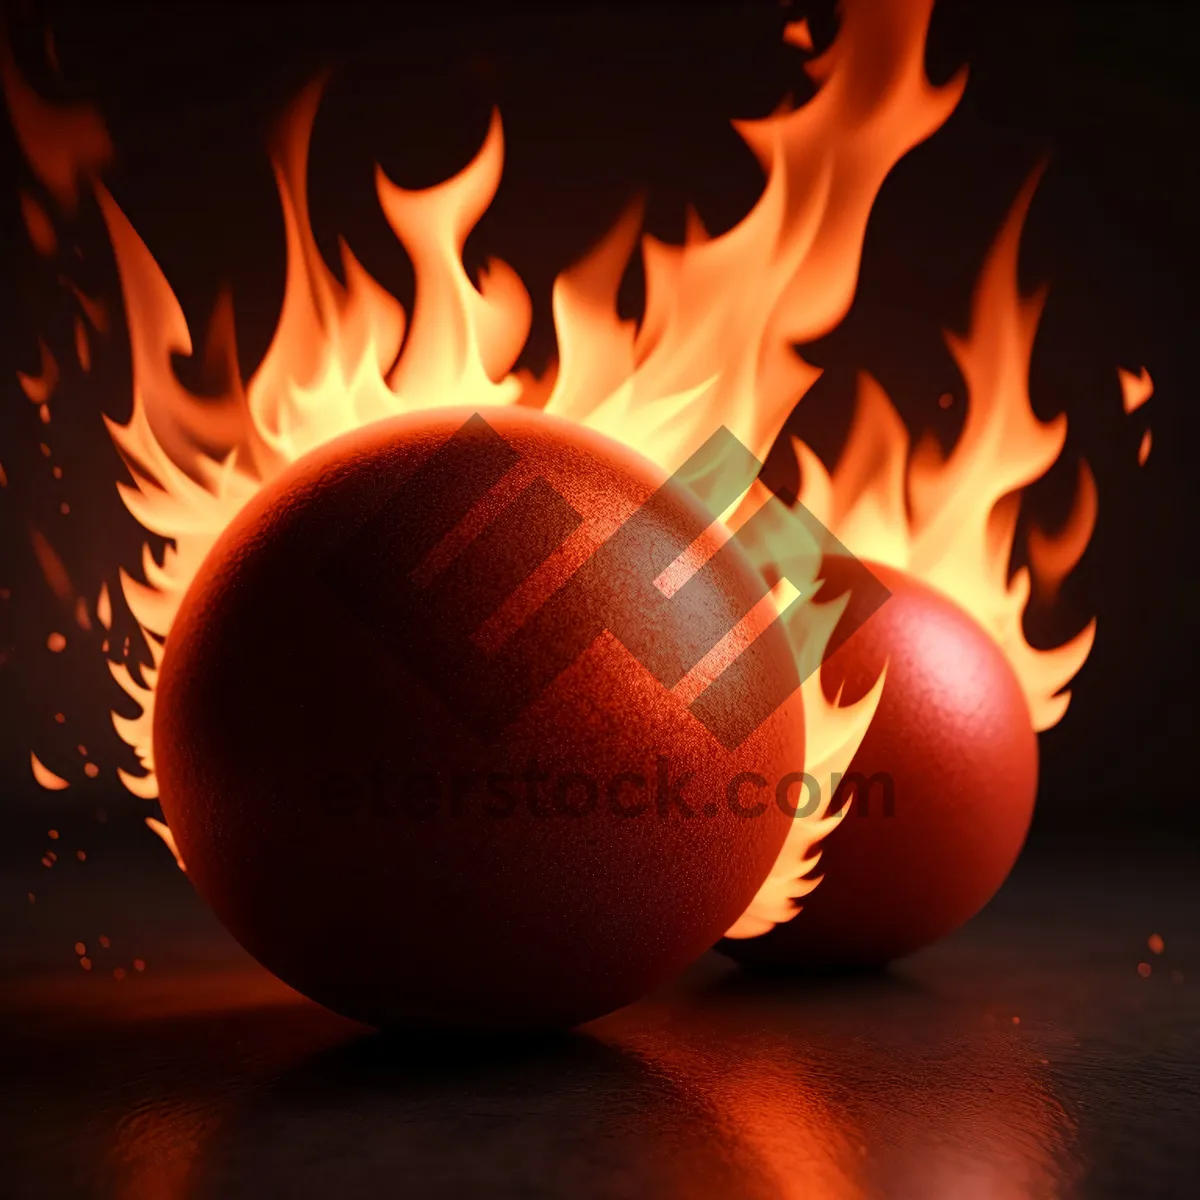 Picture of Fiery Blaze Illuminating Dark Fireplace